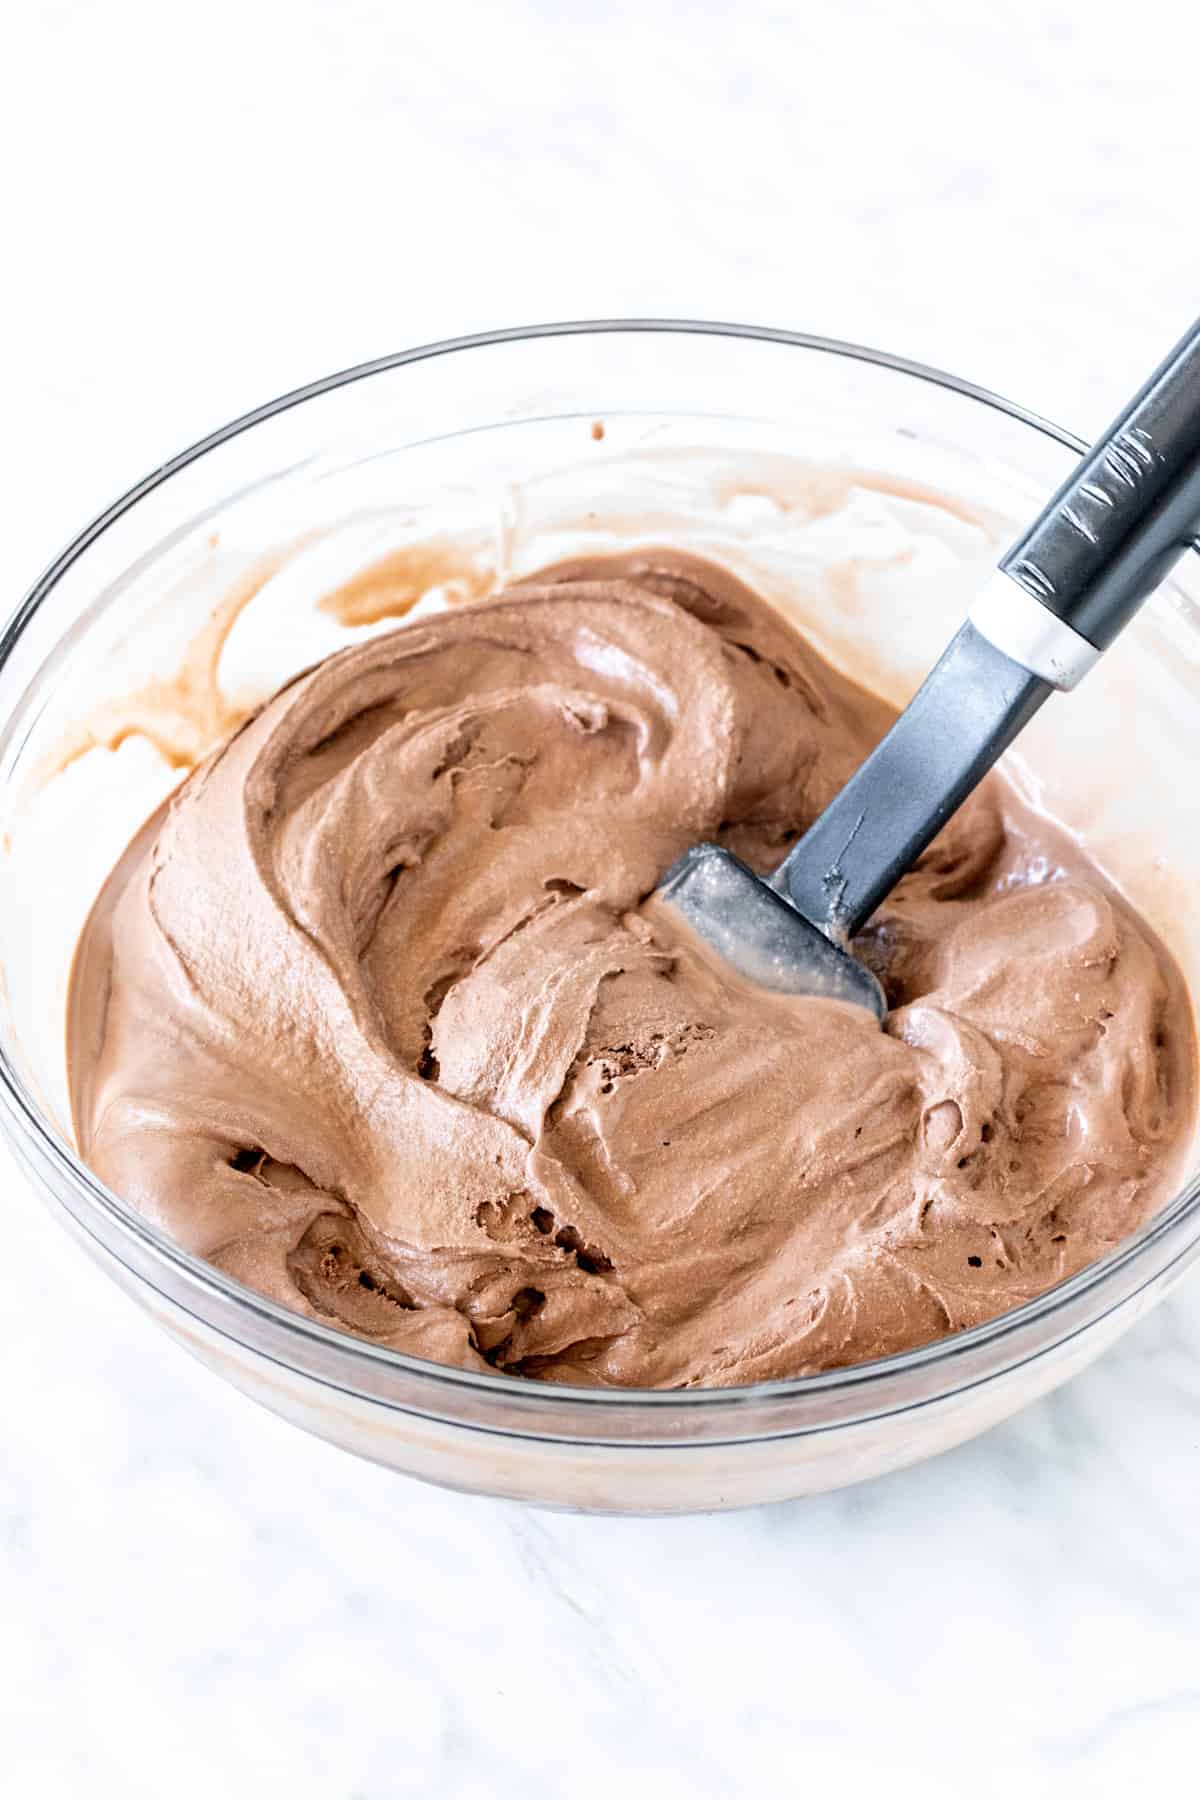 Bowl of softened chocolate ice cream